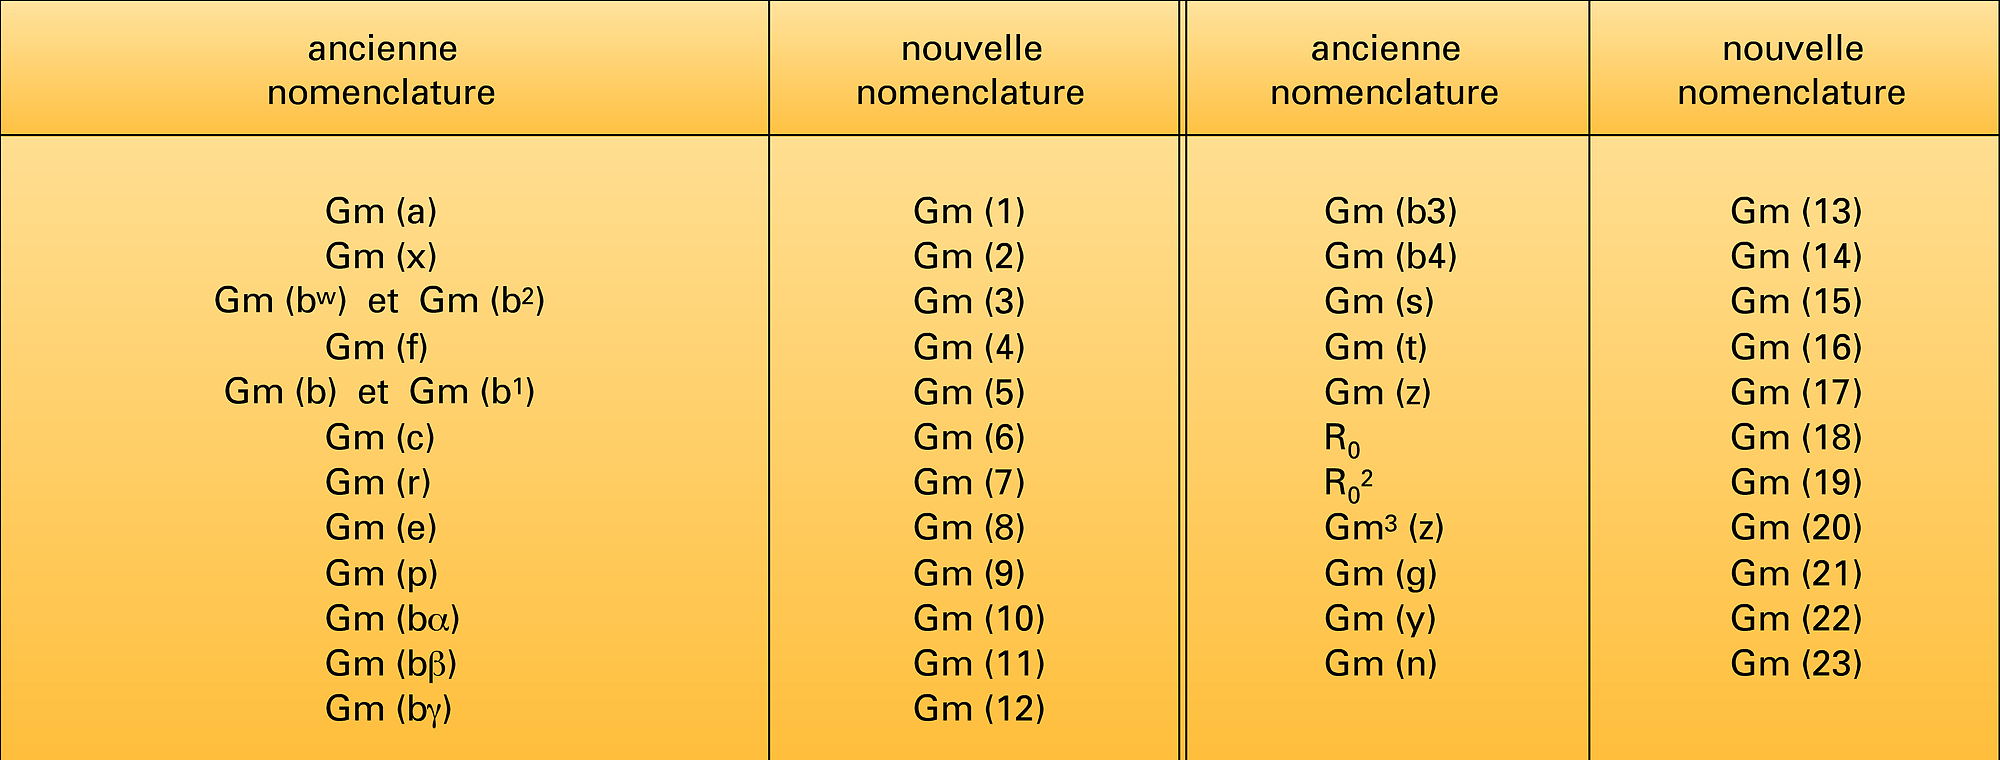 Système Gm - crédits : Encyclopædia Universalis France